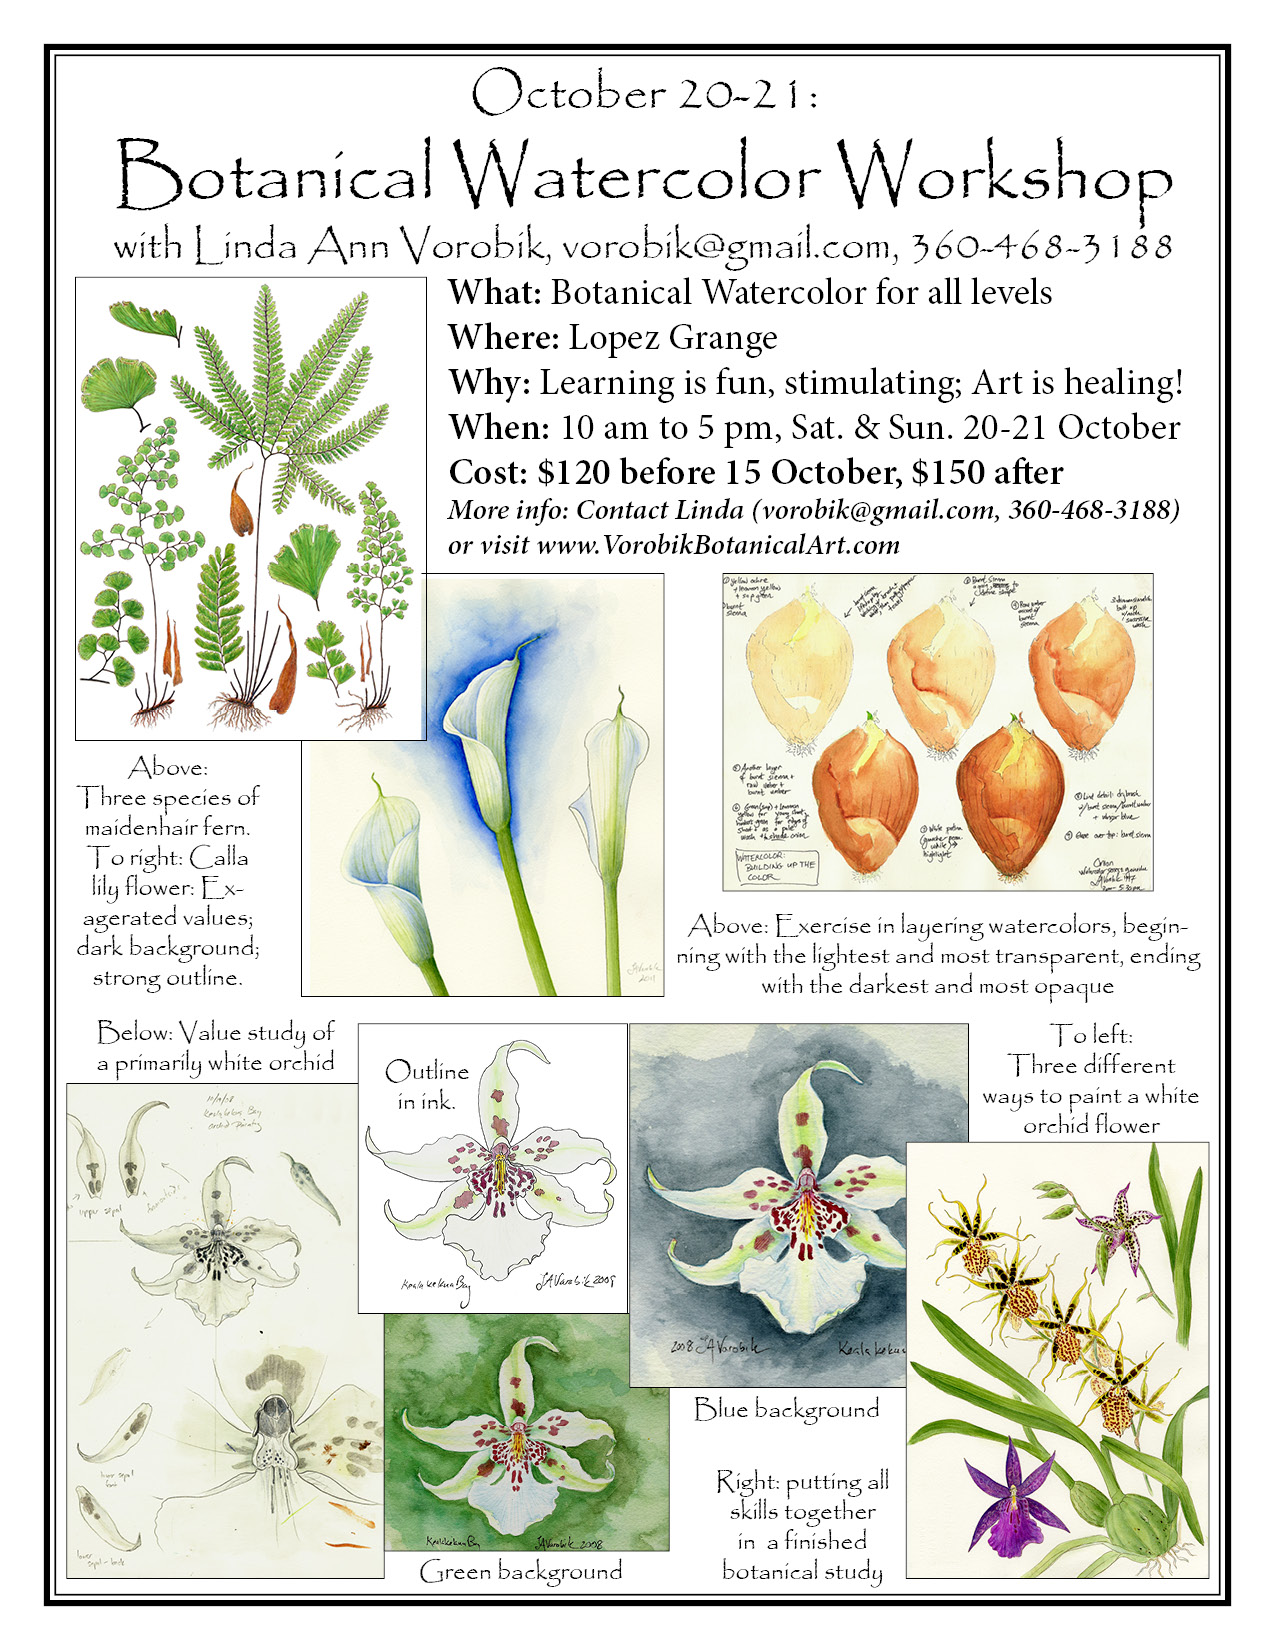 2018 Botanical Watercolor with Linda Ann Vorobik